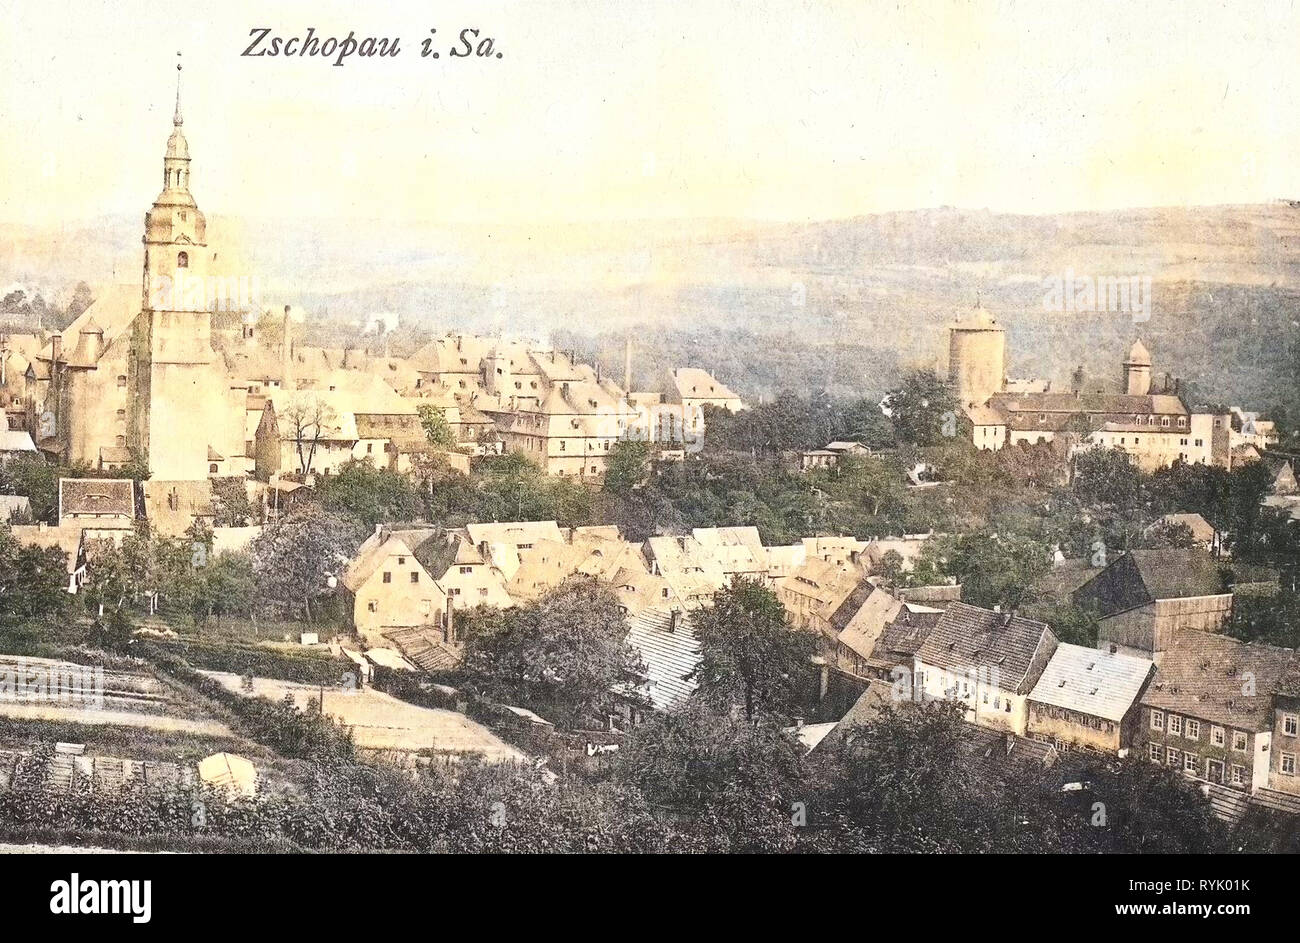 Schloss Wildeck, Zschopau, Evangelische Kirche (Zschopau), Gebäude im Erzgebirgskreis, 1913, Erzgebirgskreis, Deutschland Stockfoto